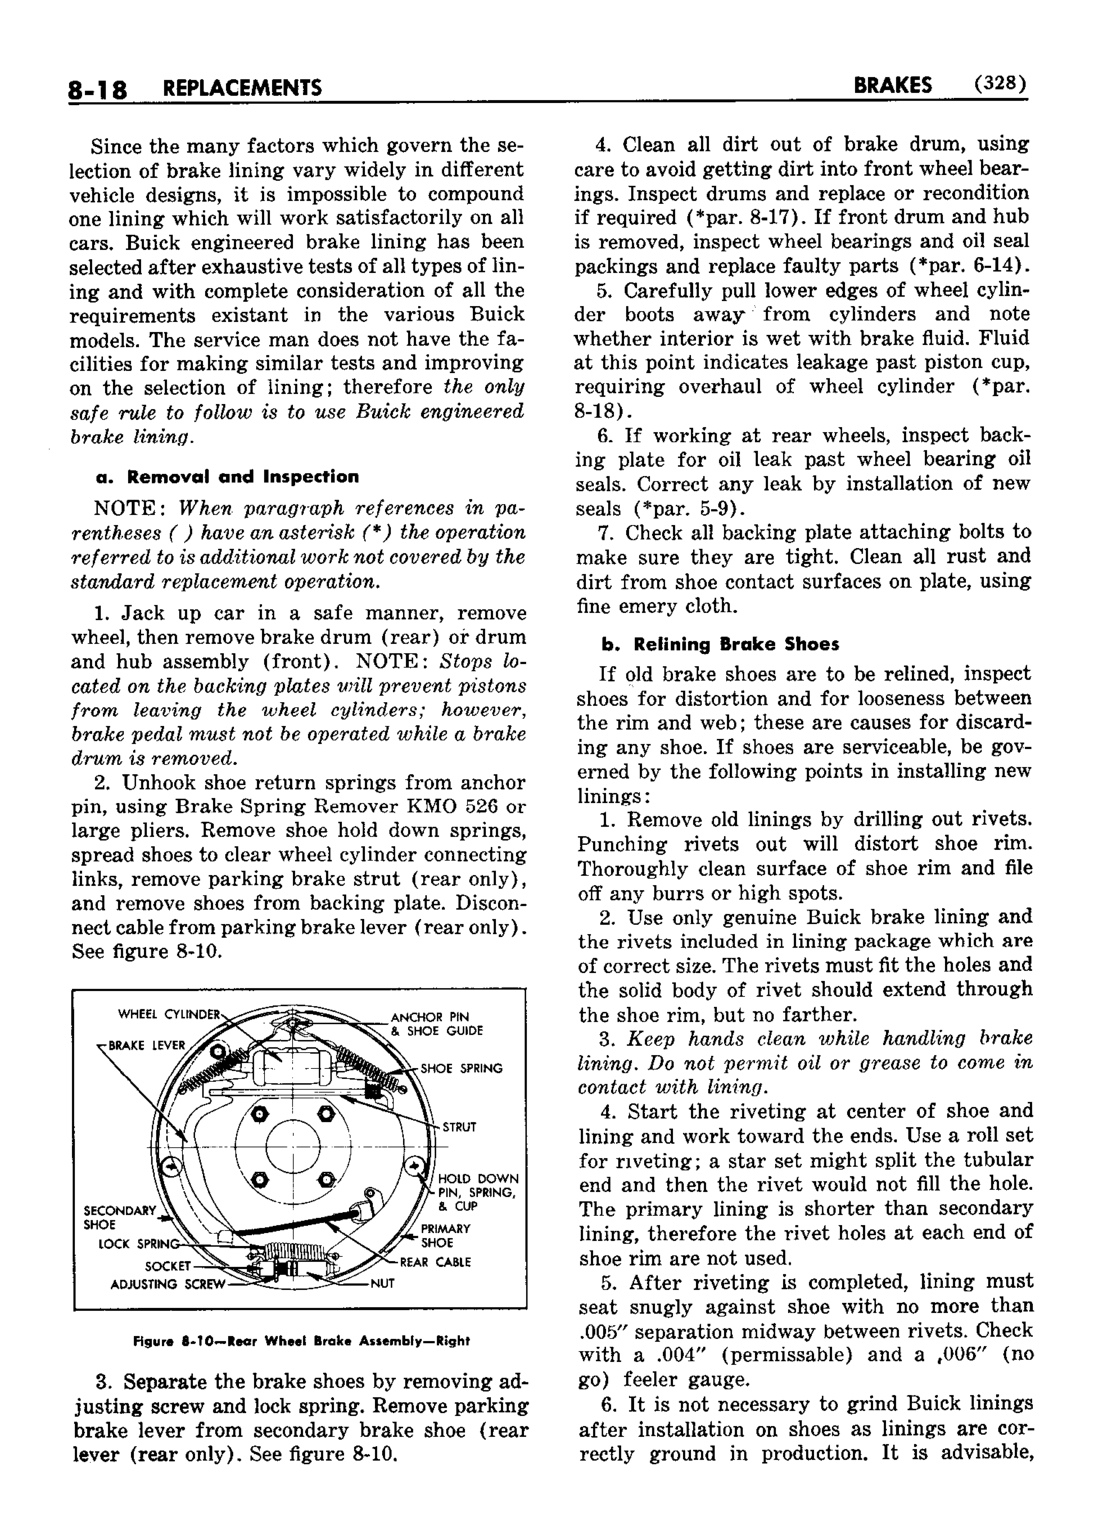 n_09 1952 Buick Shop Manual - Brakes-018-018.jpg